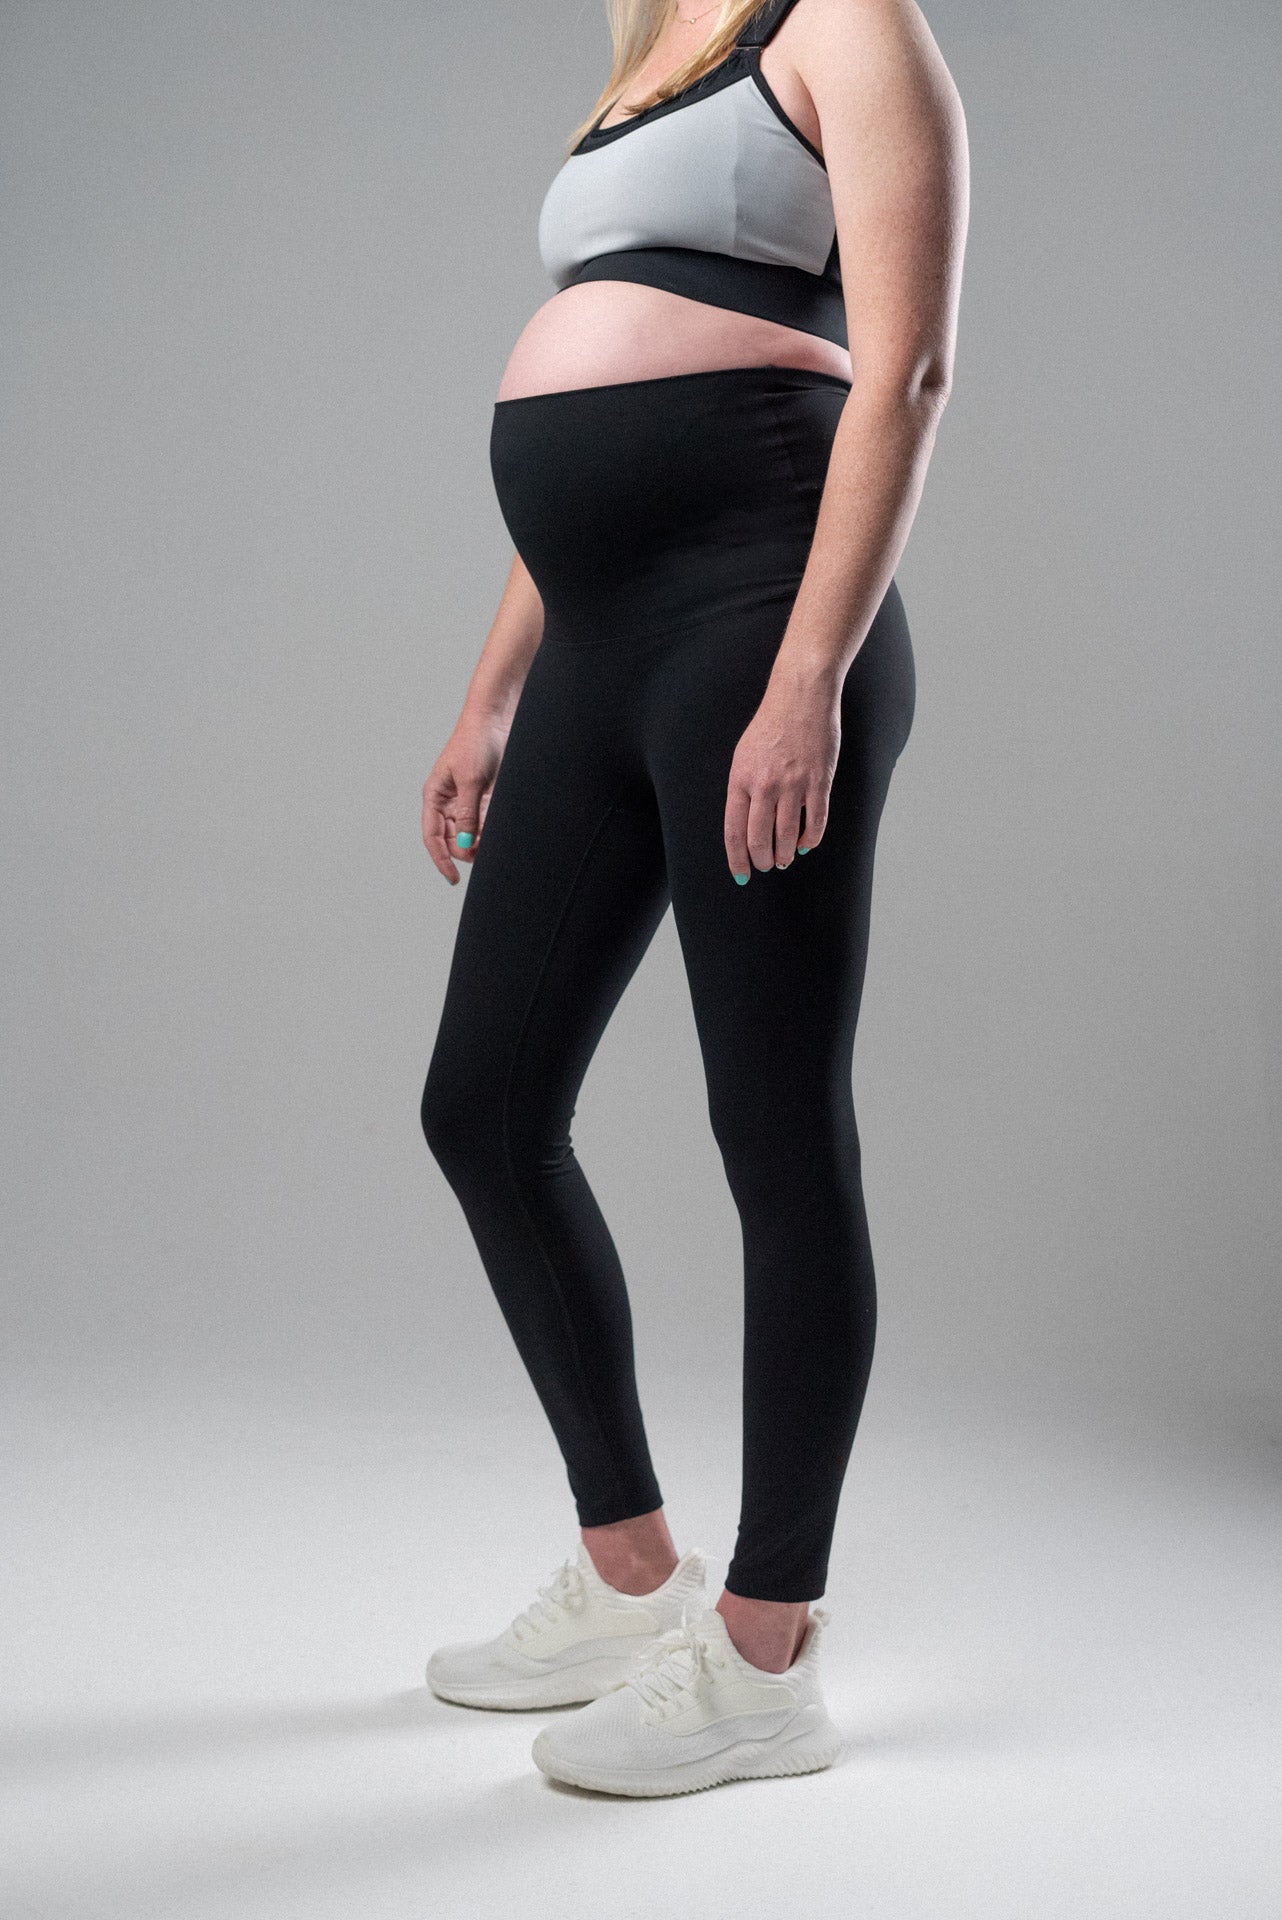 safe haven maternity leggings 28